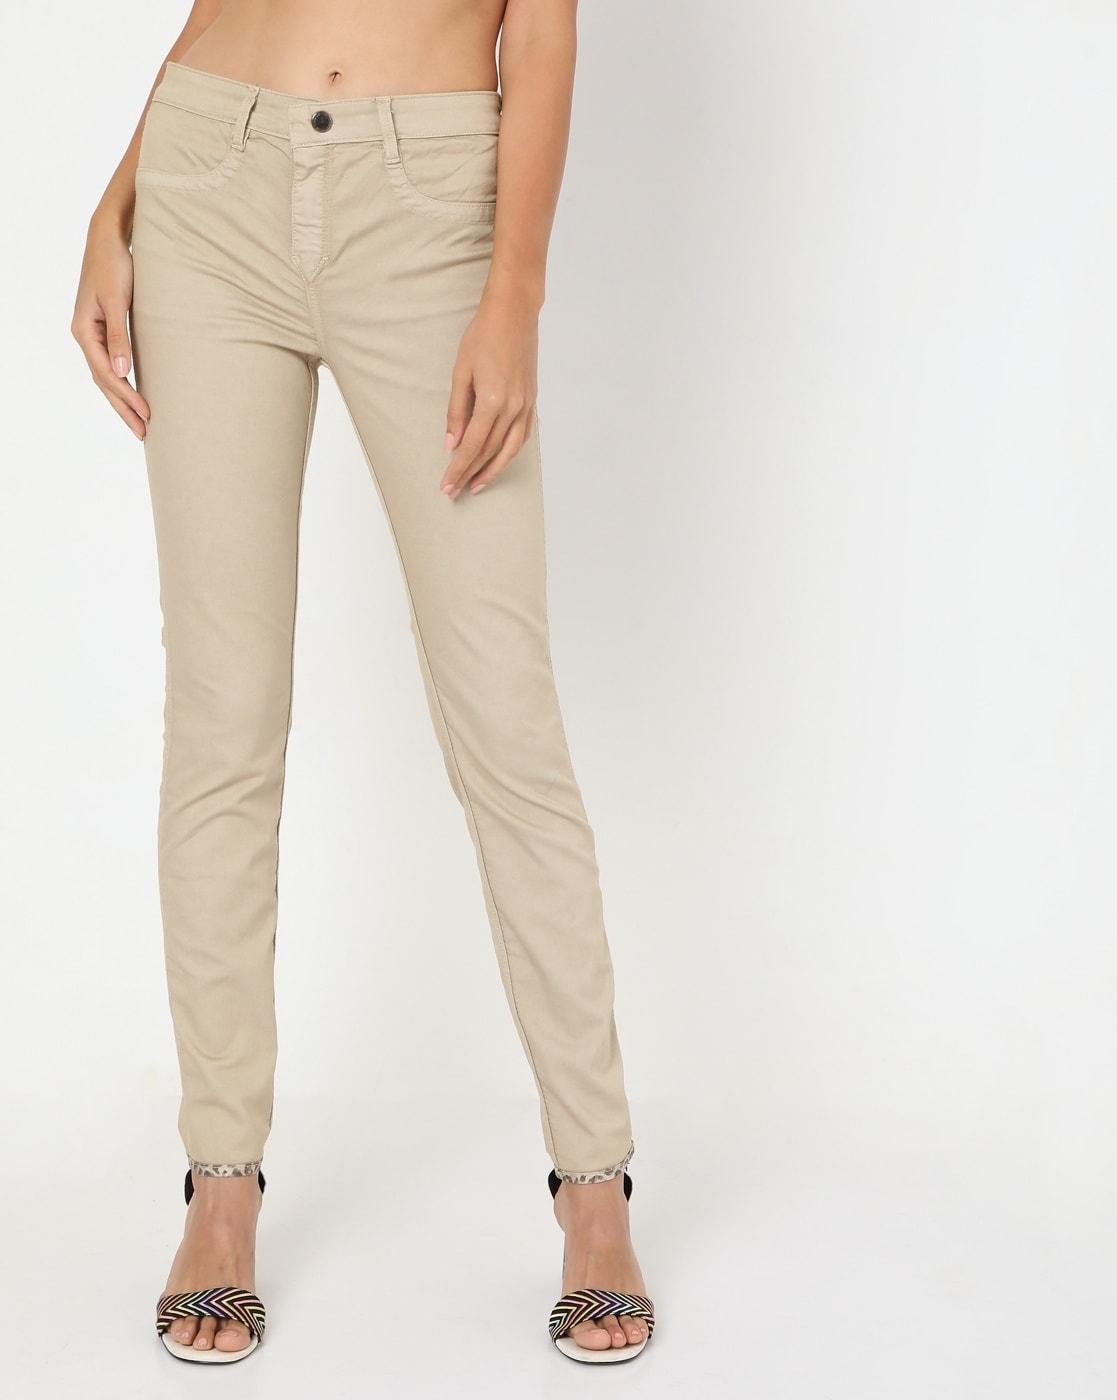 Buy PlaidPlain Mens Skinny Stretchy Khaki Pants Colored Pants Slim Fit  Slacks Tapered Trousers 819 Taupe 32X34 at Amazonin